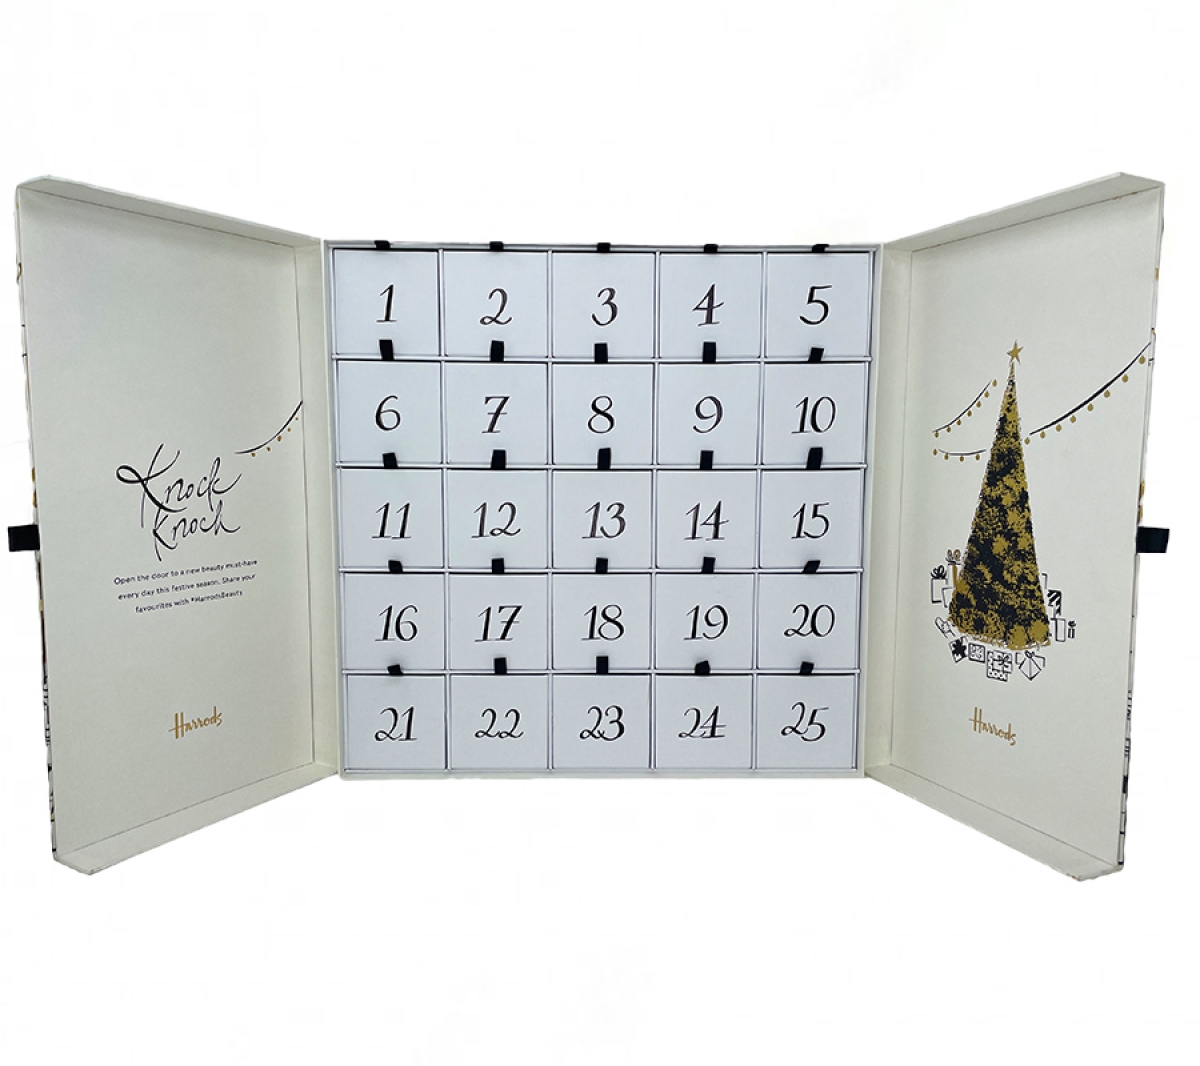 Harrods-Beauty-Box-Advent-Calendar